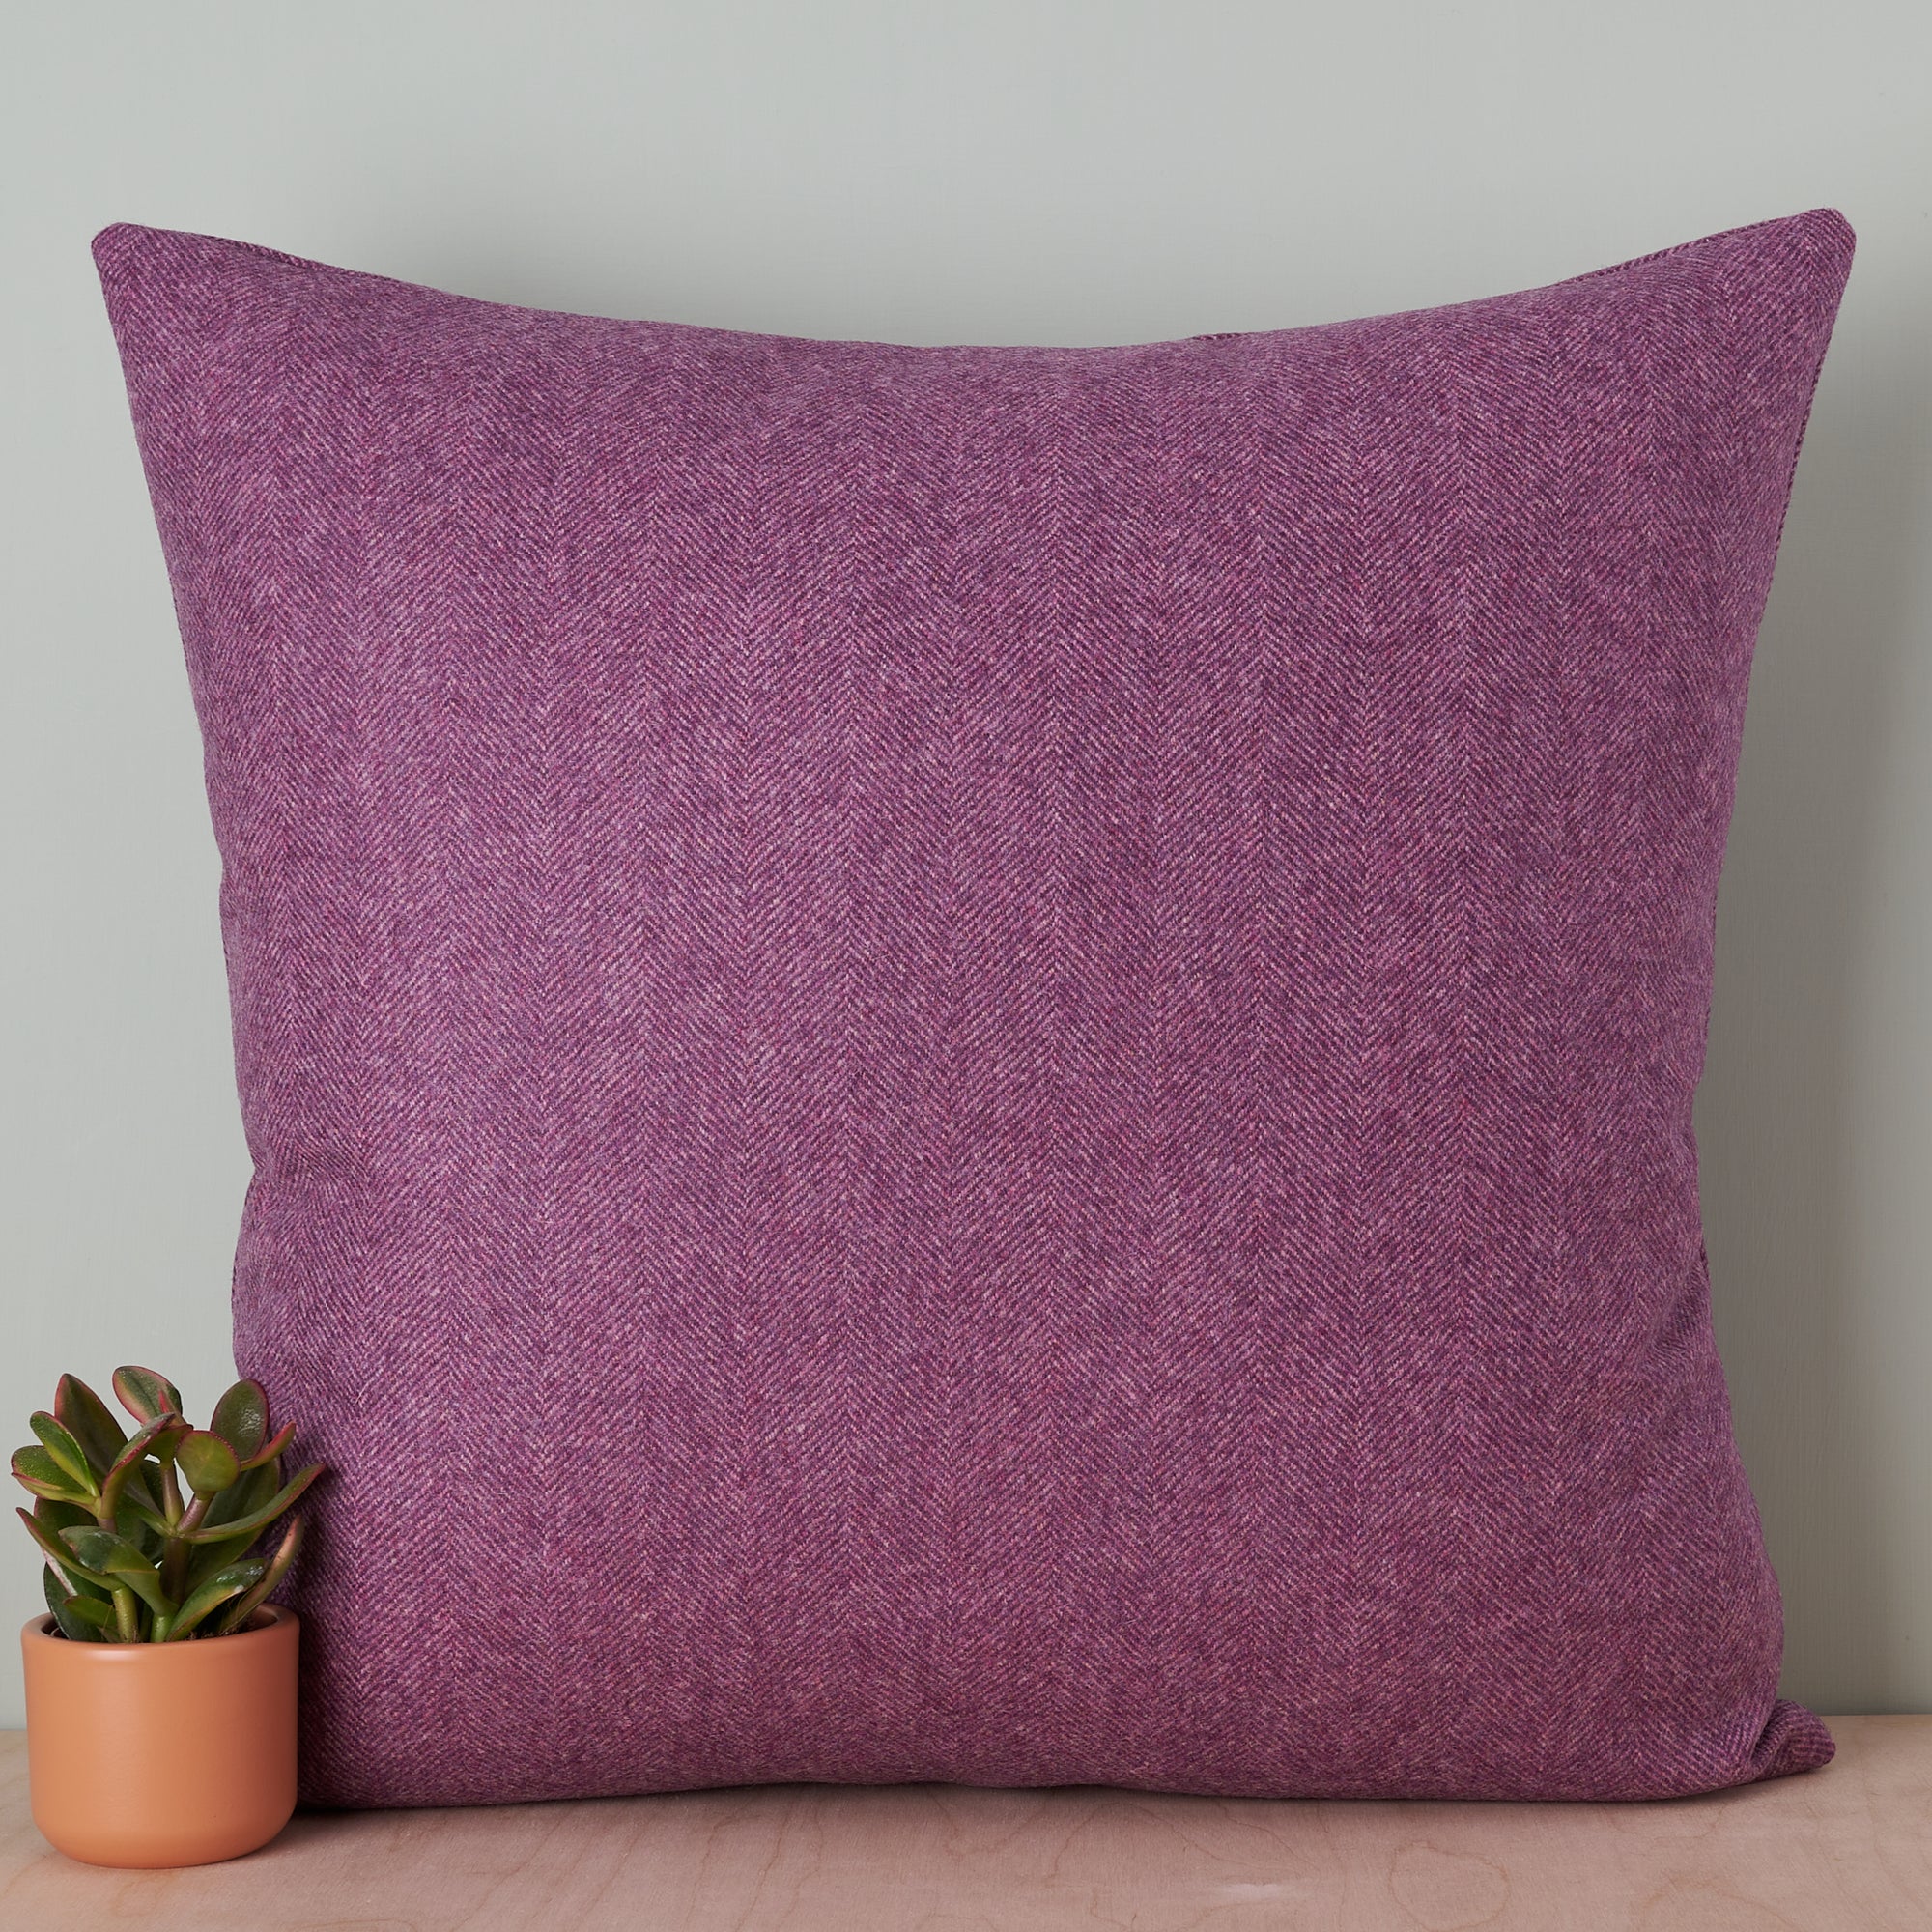 Amethyst purple Abraham Moon Wool Cushion